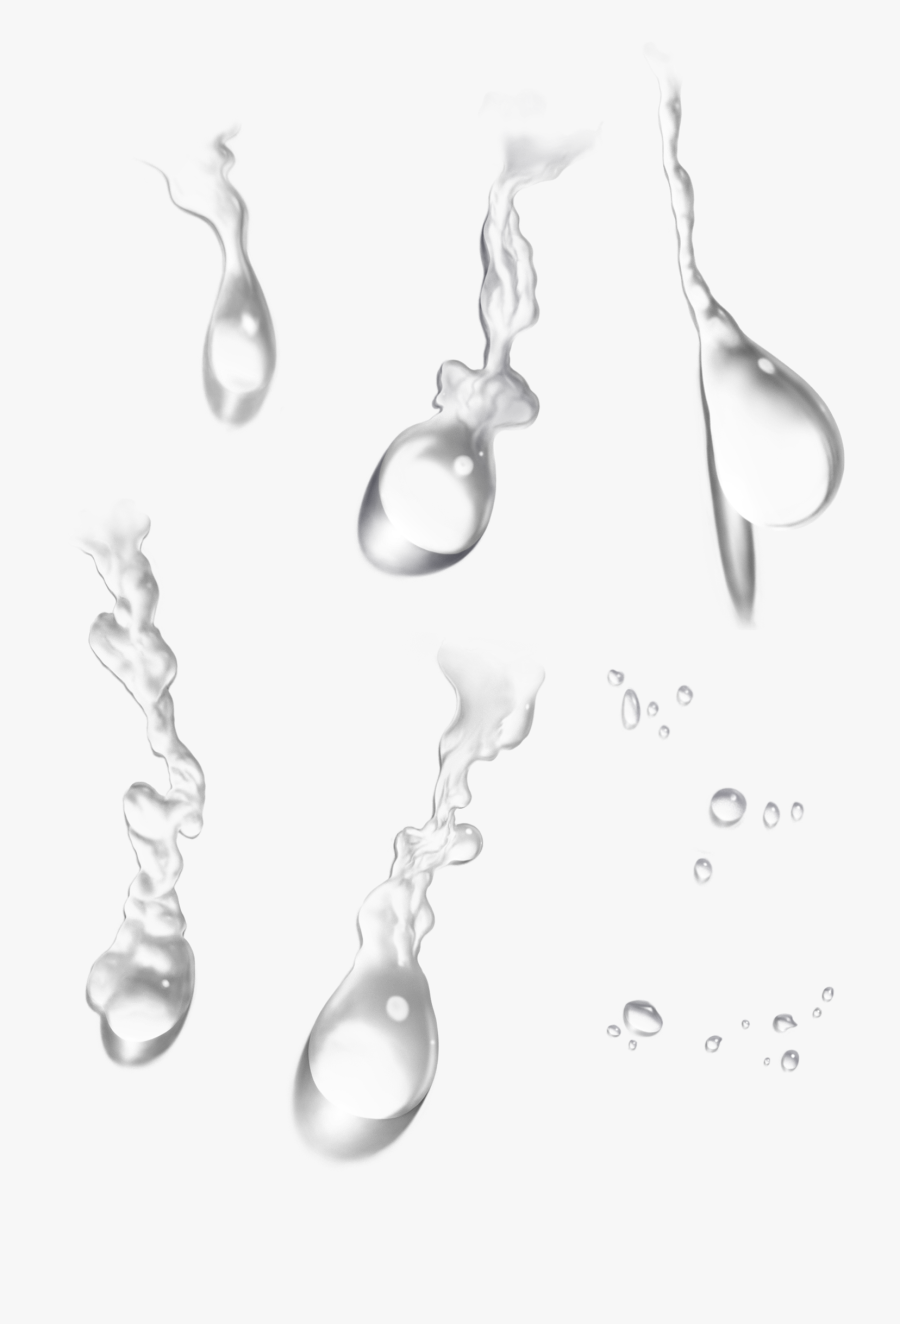 Water Drop Png, Transparent Clipart